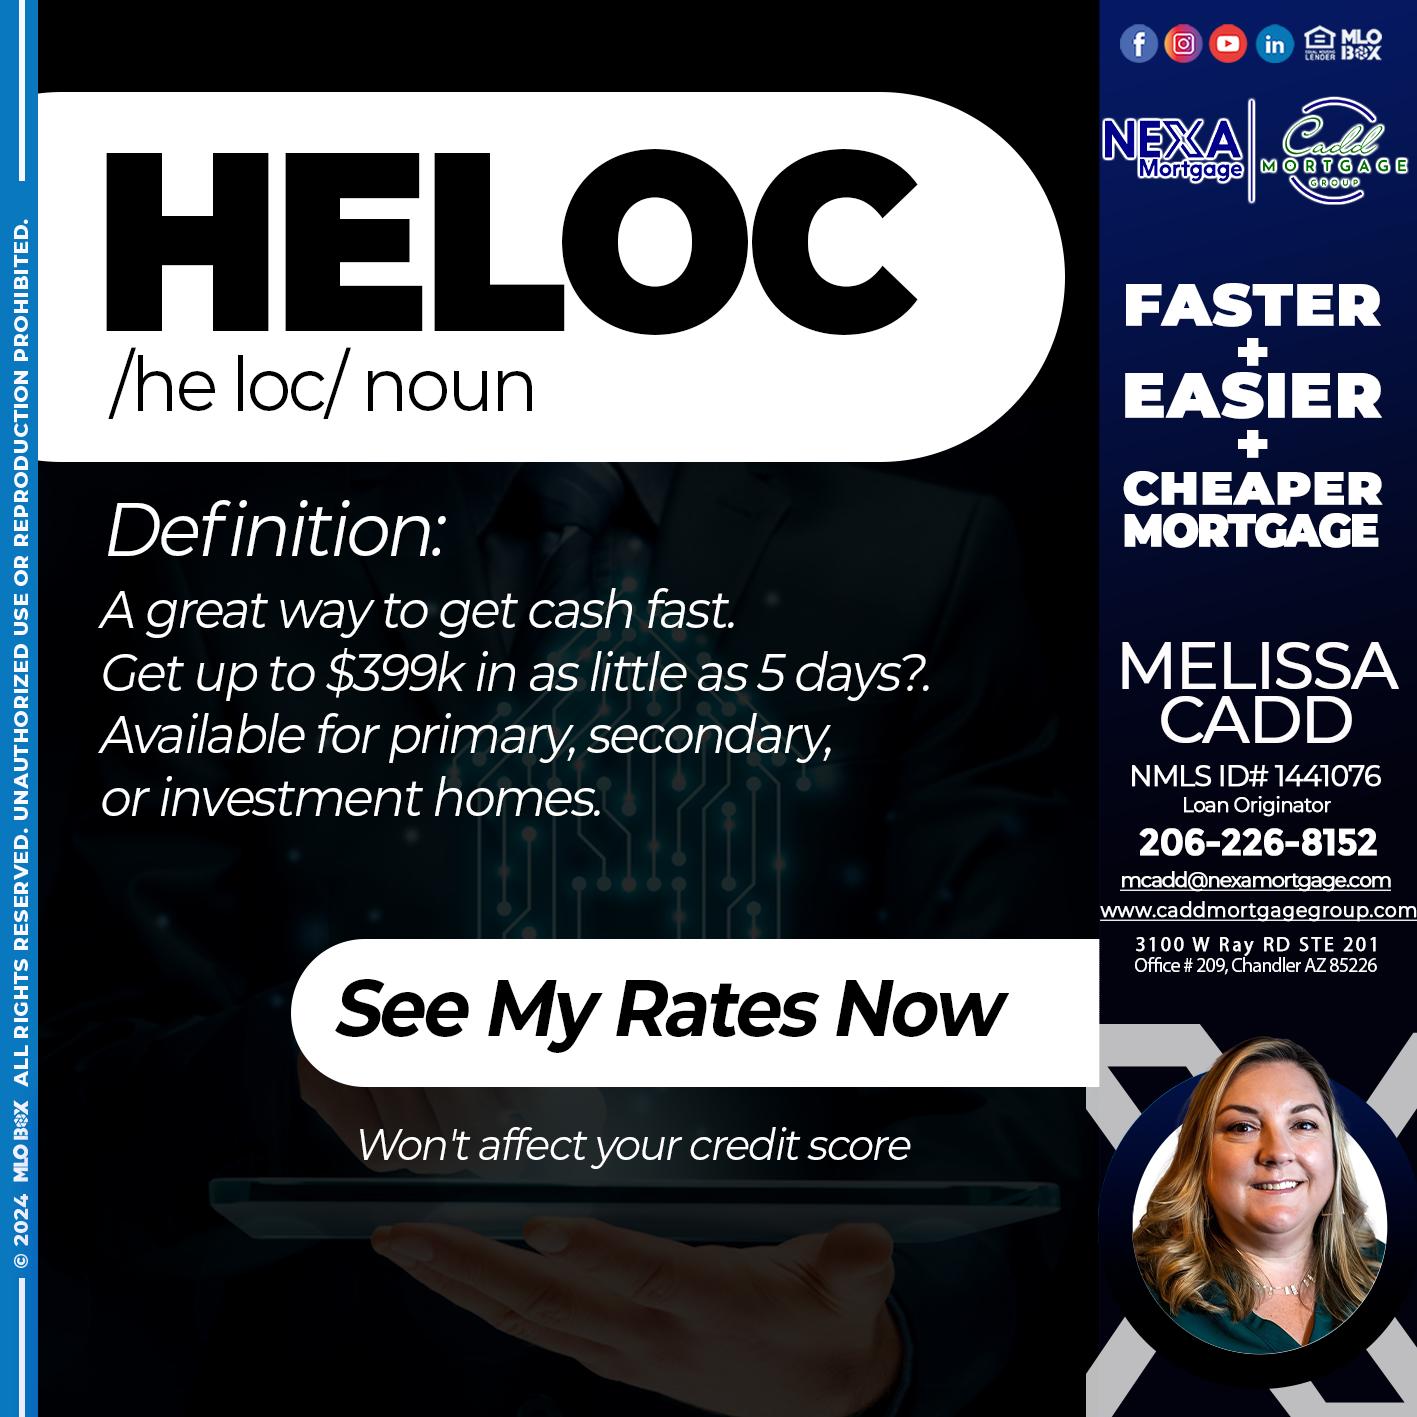 HELOC - Melissa Cadd -Loan Originator